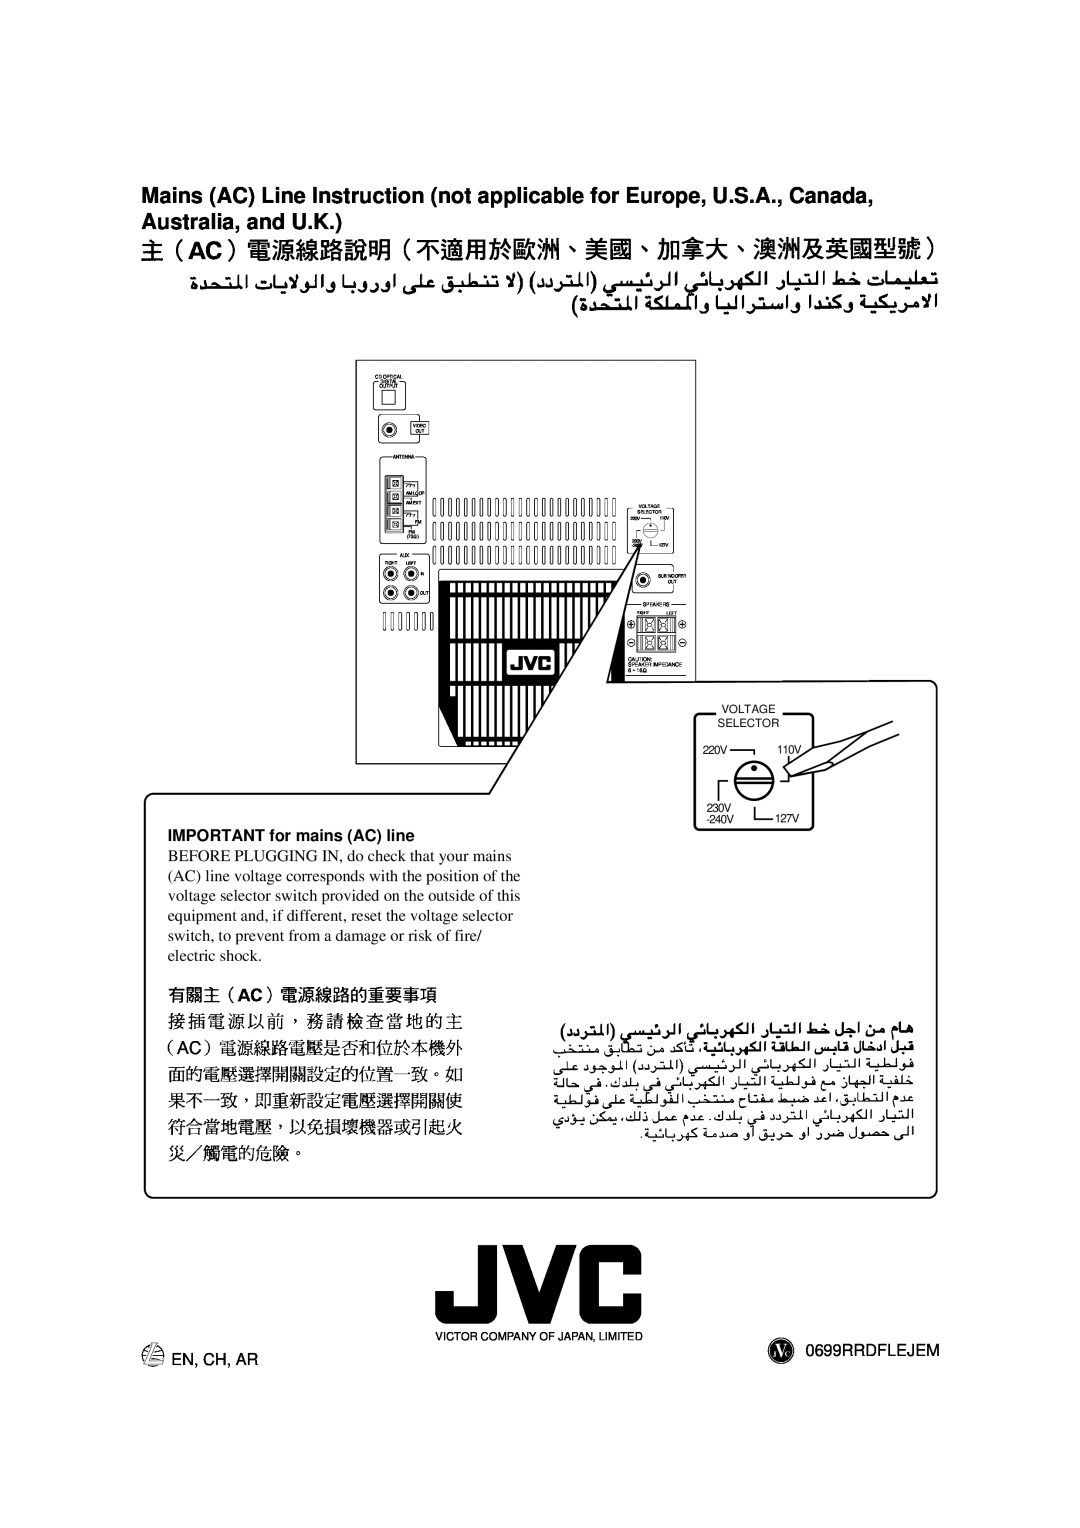 JVC CA-MXJ787V, CA-MXJ777V manual IMPORTANT for mains AC line, En, Ch, Ar, JVC 0699RRDFLEJEM 